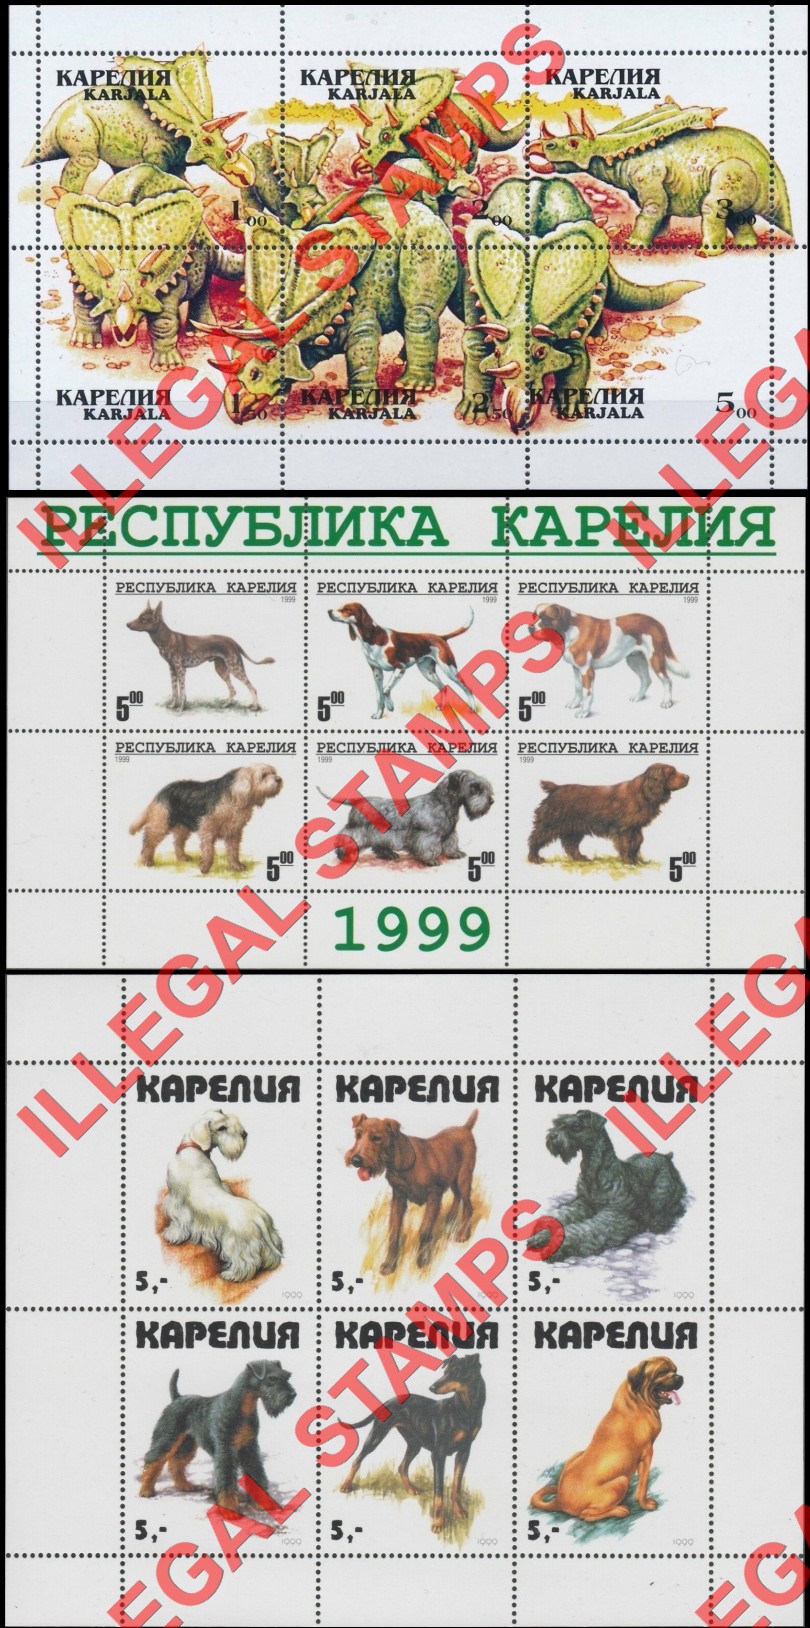 Karjala 1999 Illegal Stamps (Part 1)